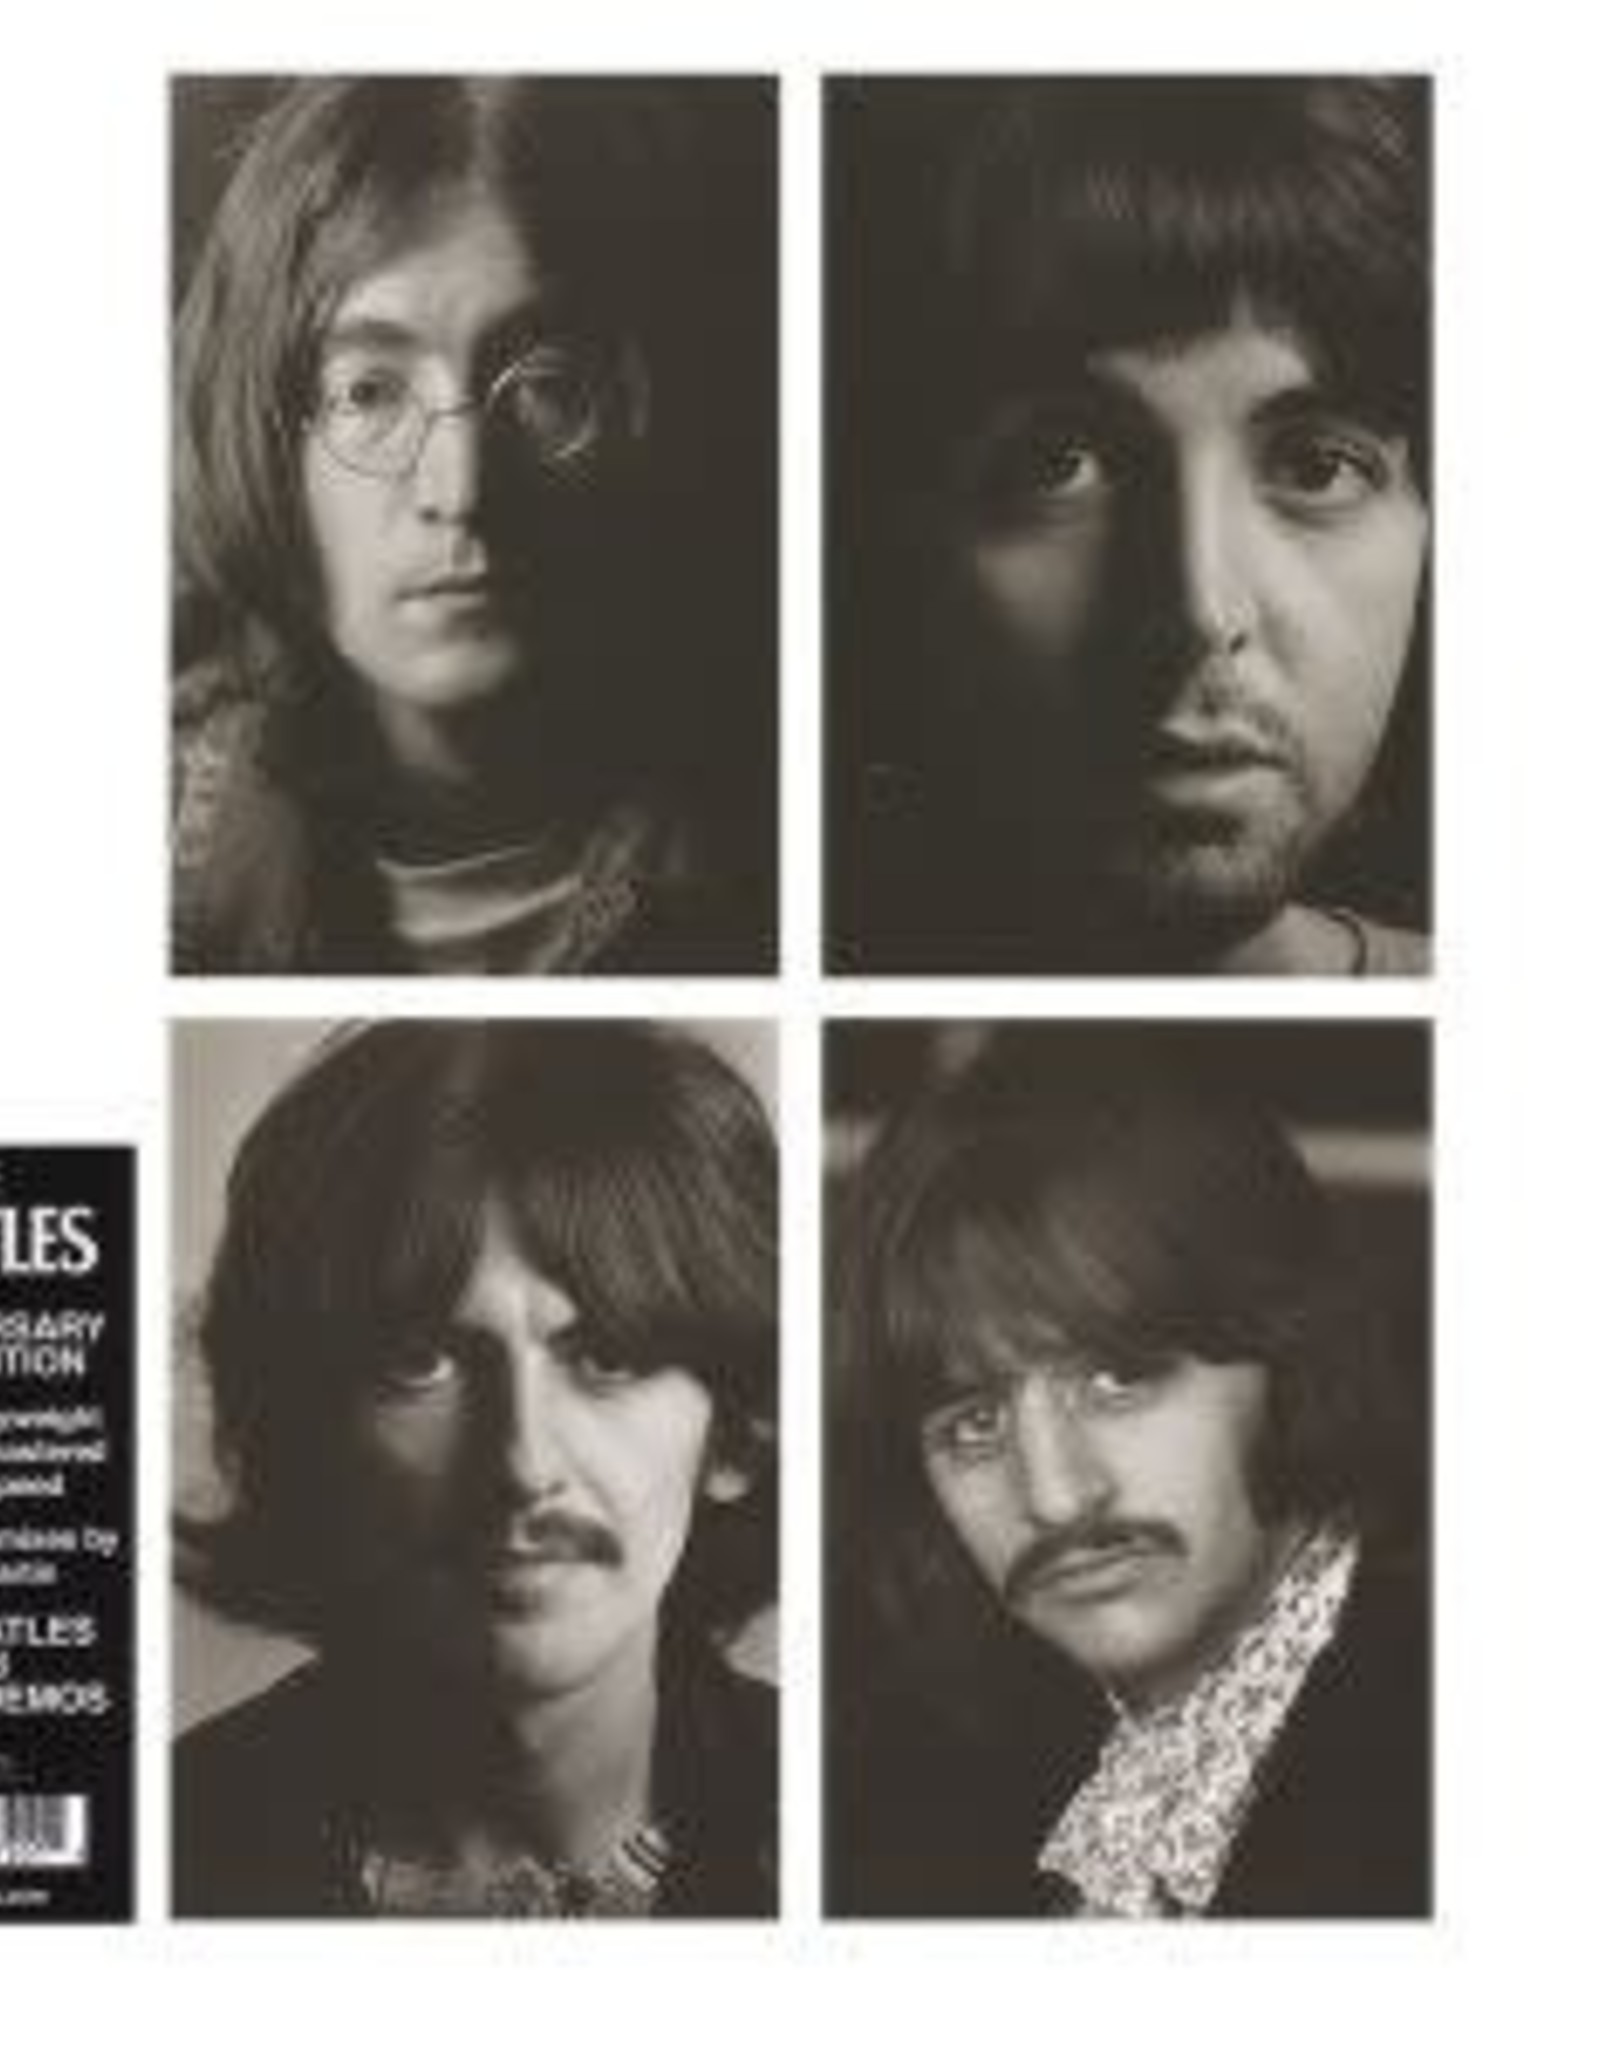 Beatles - The Beatles (White Album) And Esher Demos [Deluxe Box]